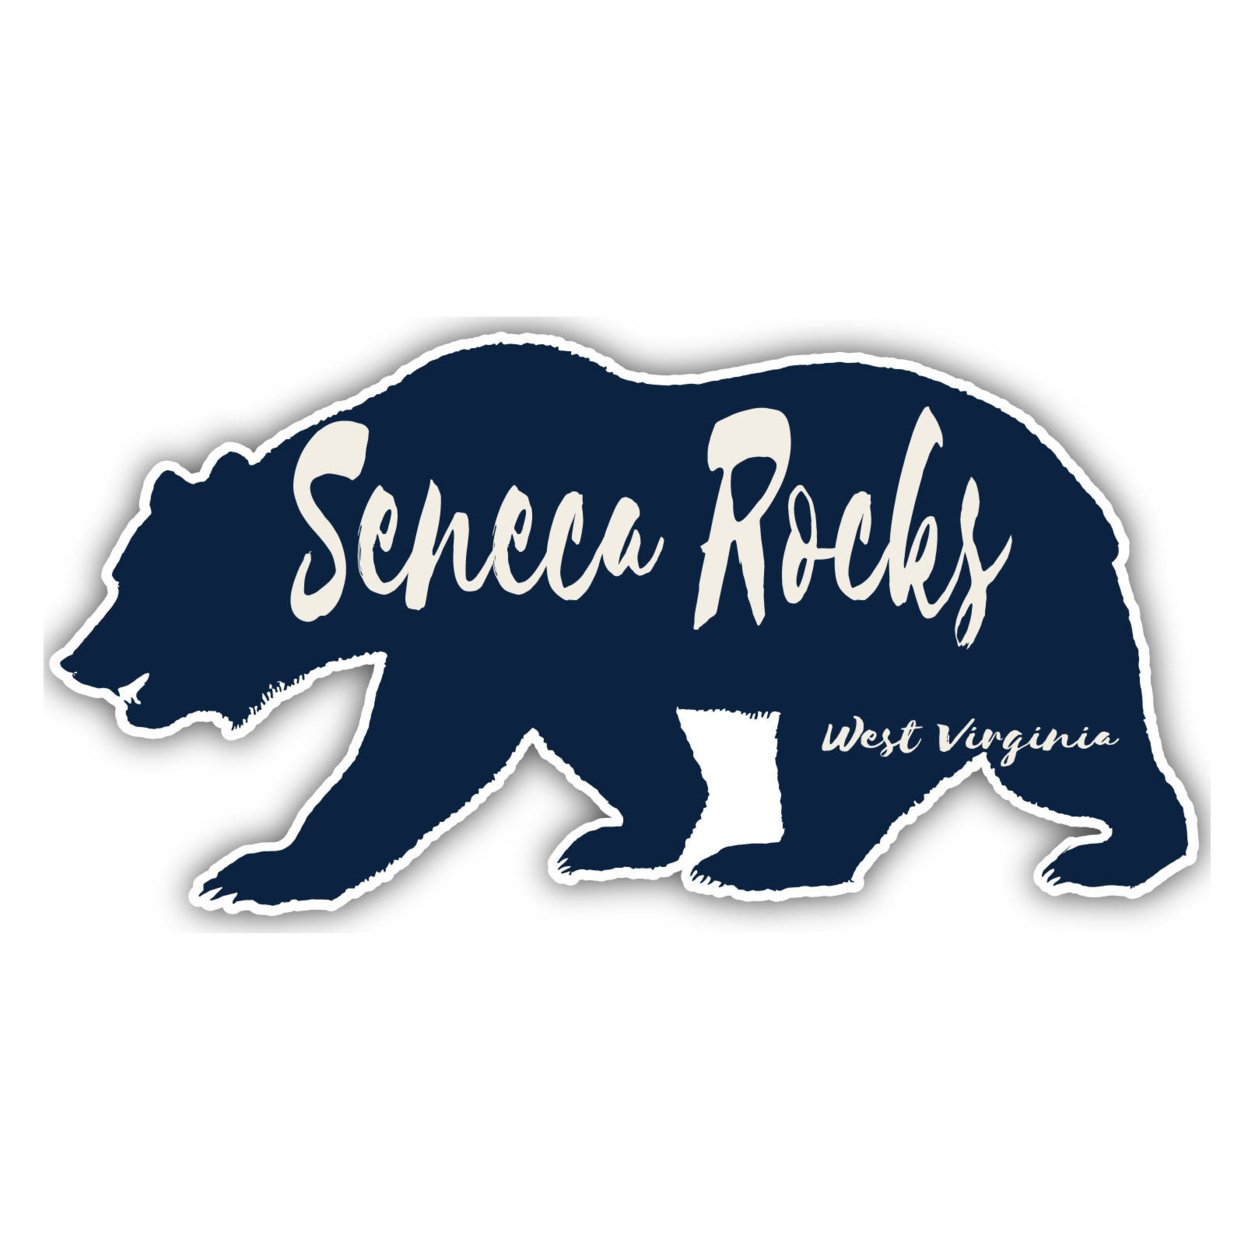 Seneca Rocks West Virginia Souvenir Decorative Stickers (Choose Theme And Size) - Single Unit, 2-Inch, Bear